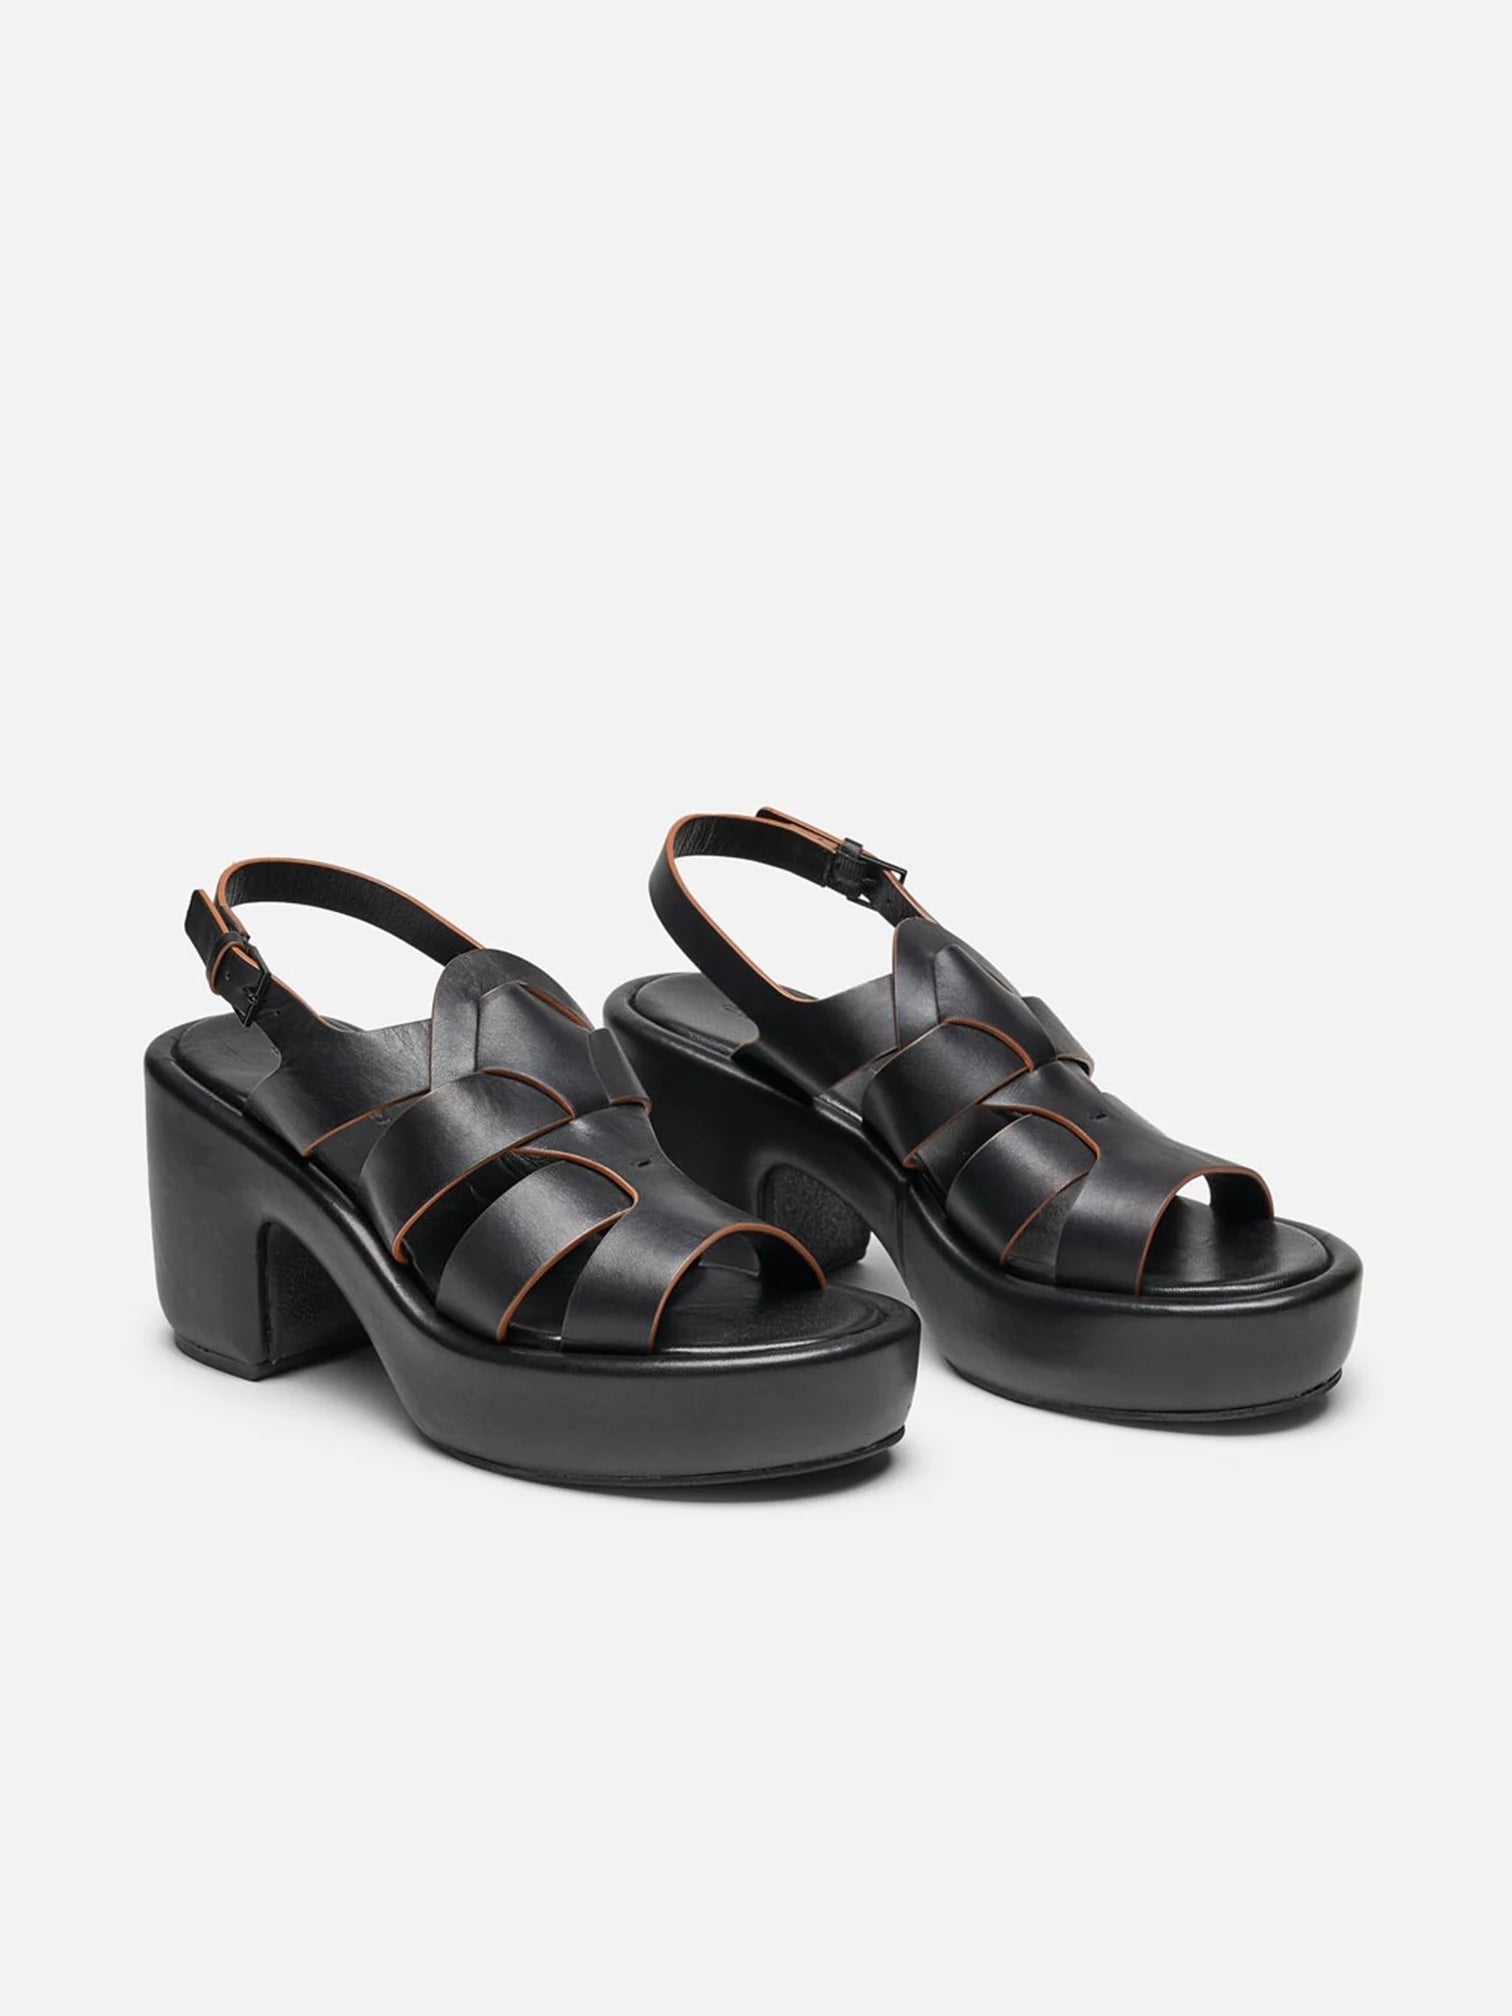 SANDALS - DIVINA sandals, black smooth calfskin || OUTLET - DIVINABLKLCAM350 - Clergerie Paris - USA